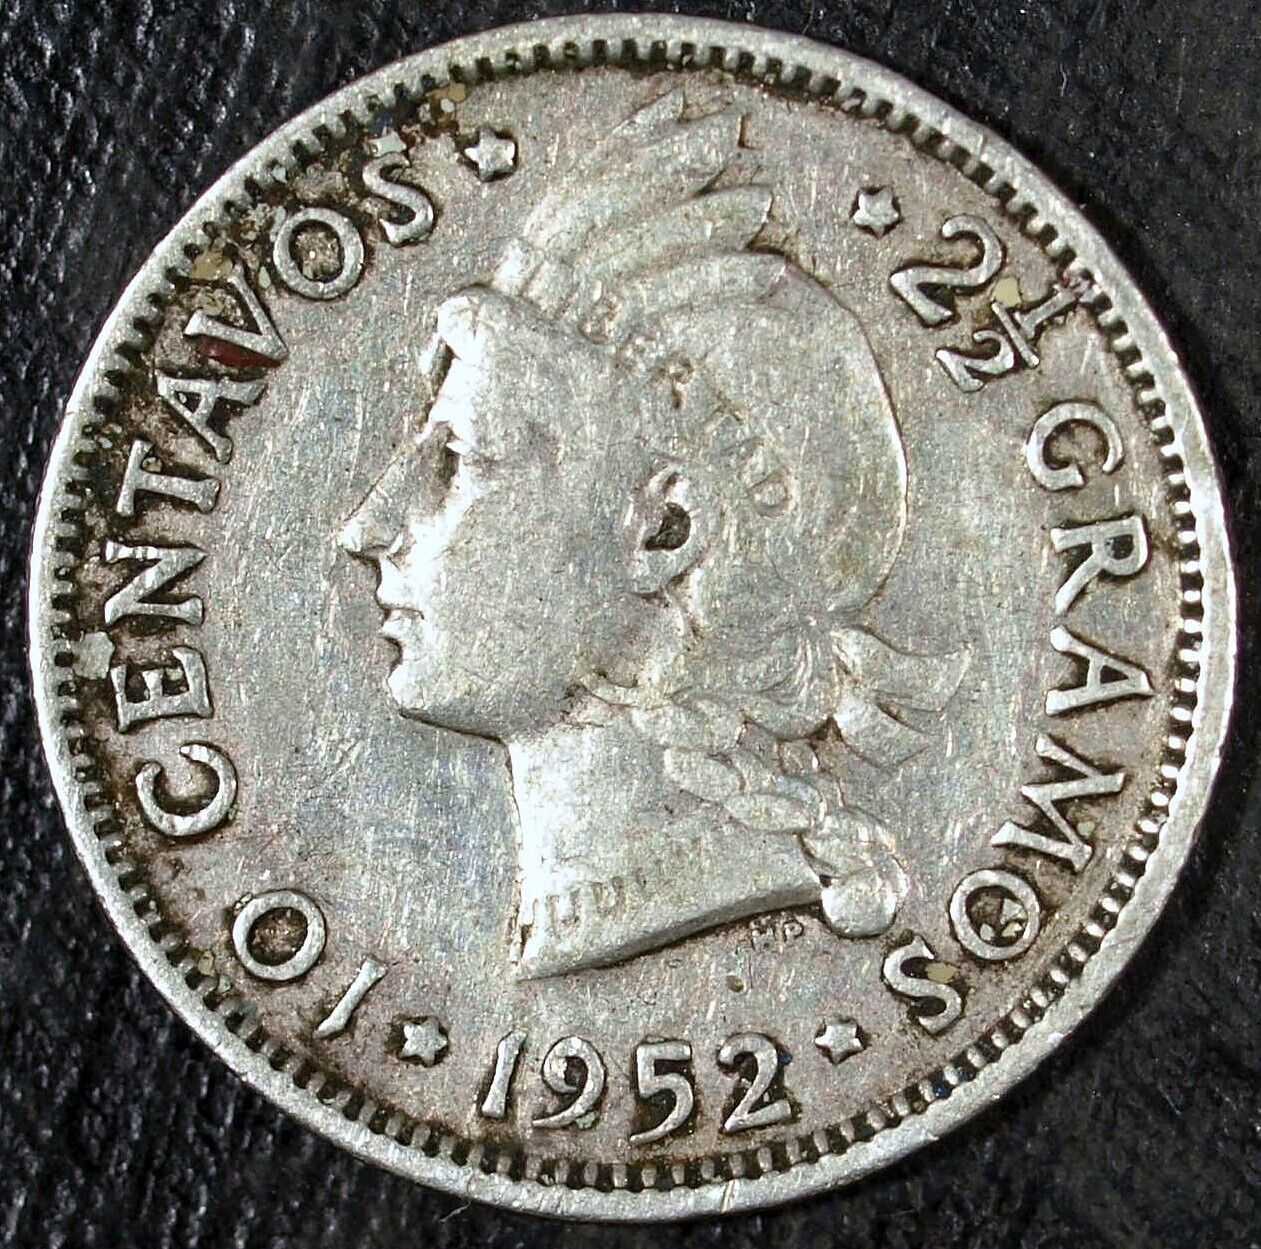 1952 República Dominica 10 Cents ☆☆ Circulated ☆☆ 400